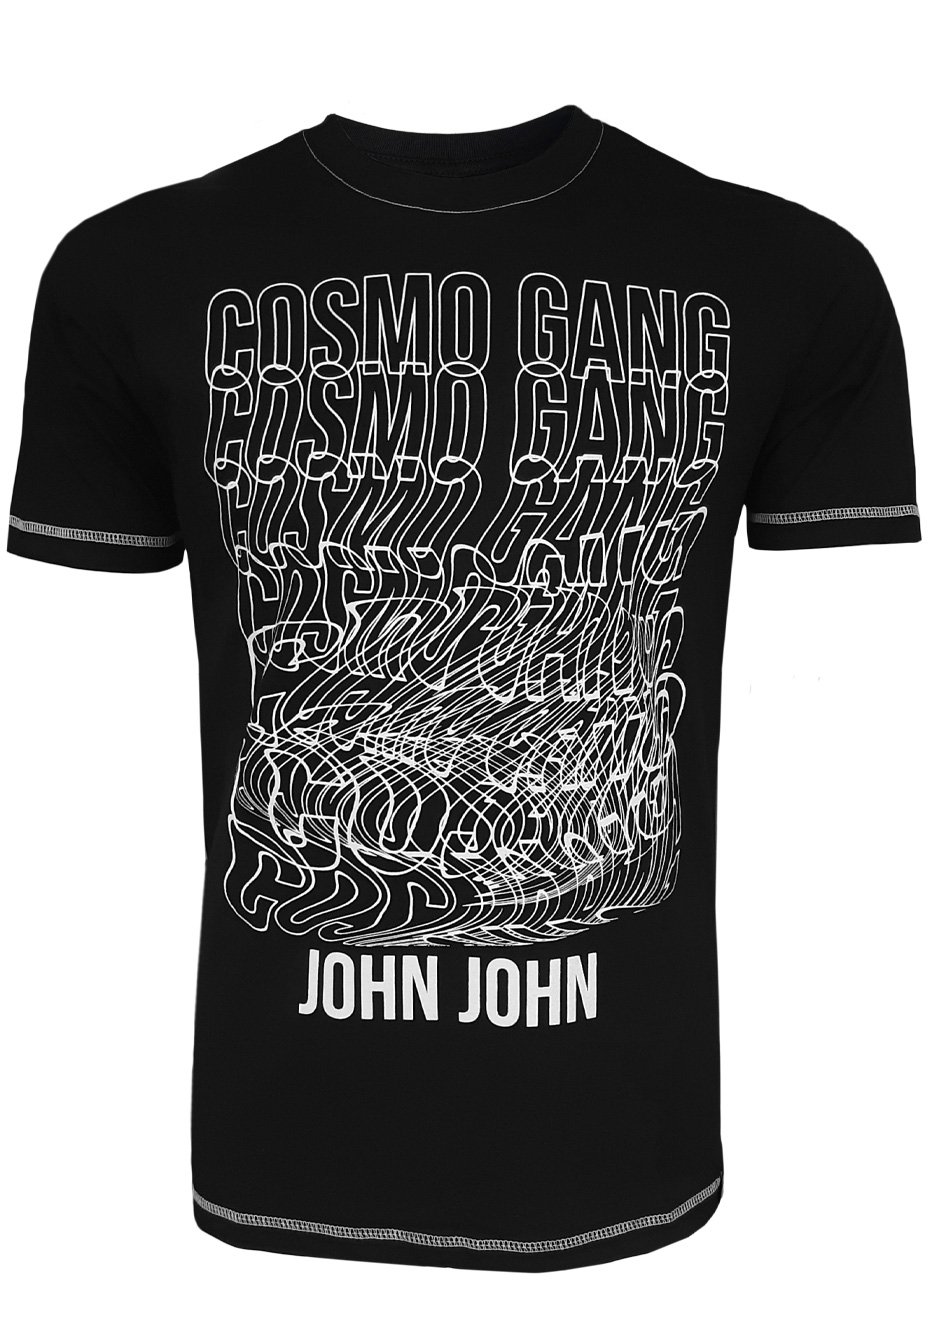 Camiseta John John Masculina Cosmo Gang Preta